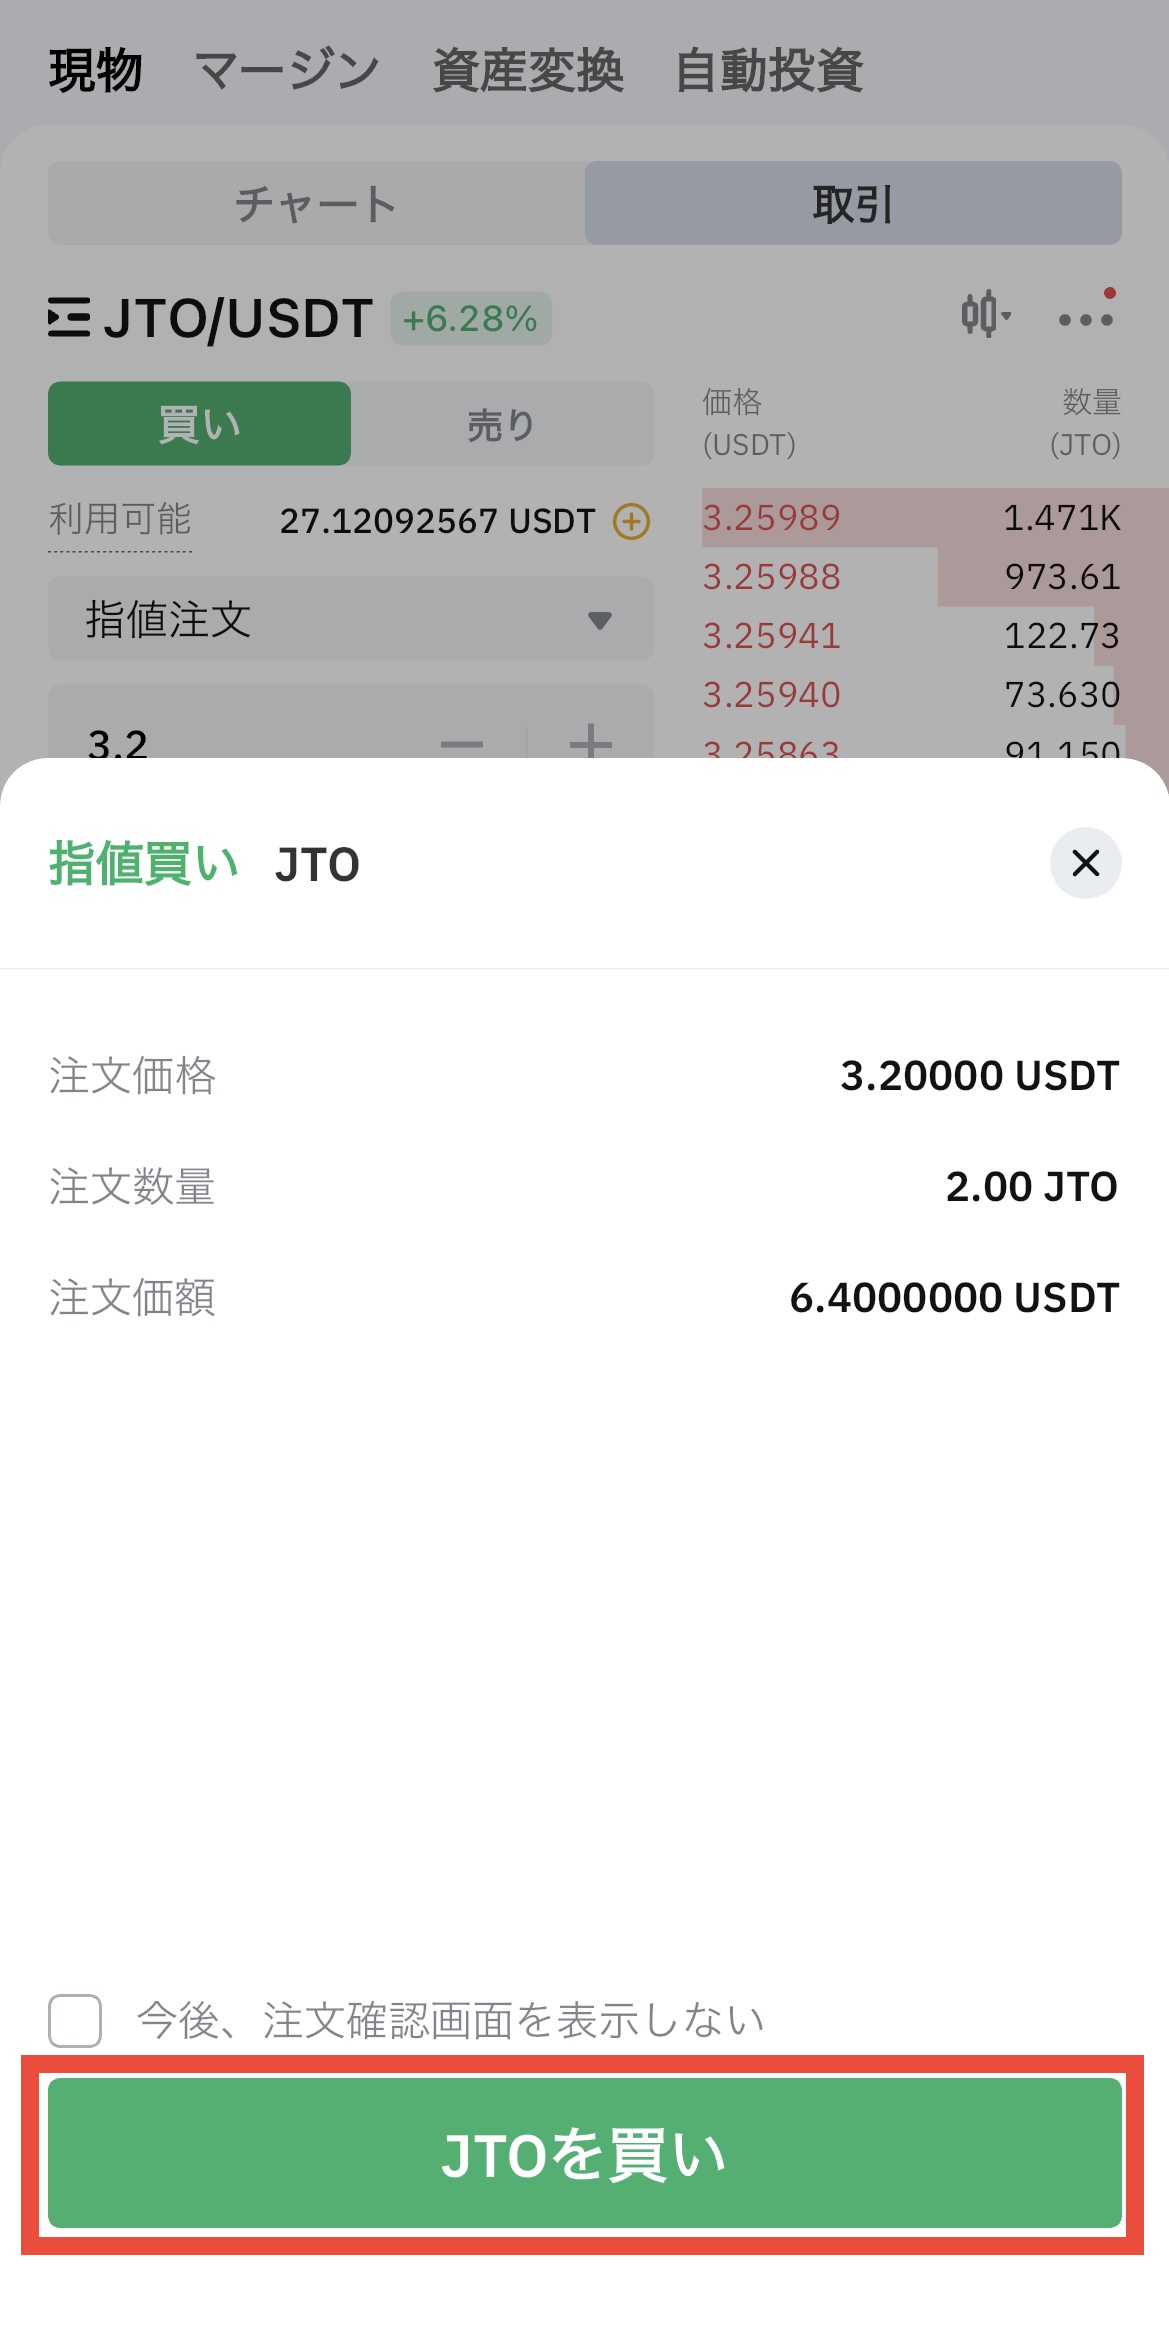 BybitでUSDTを売ってJTO/Jitoを購入